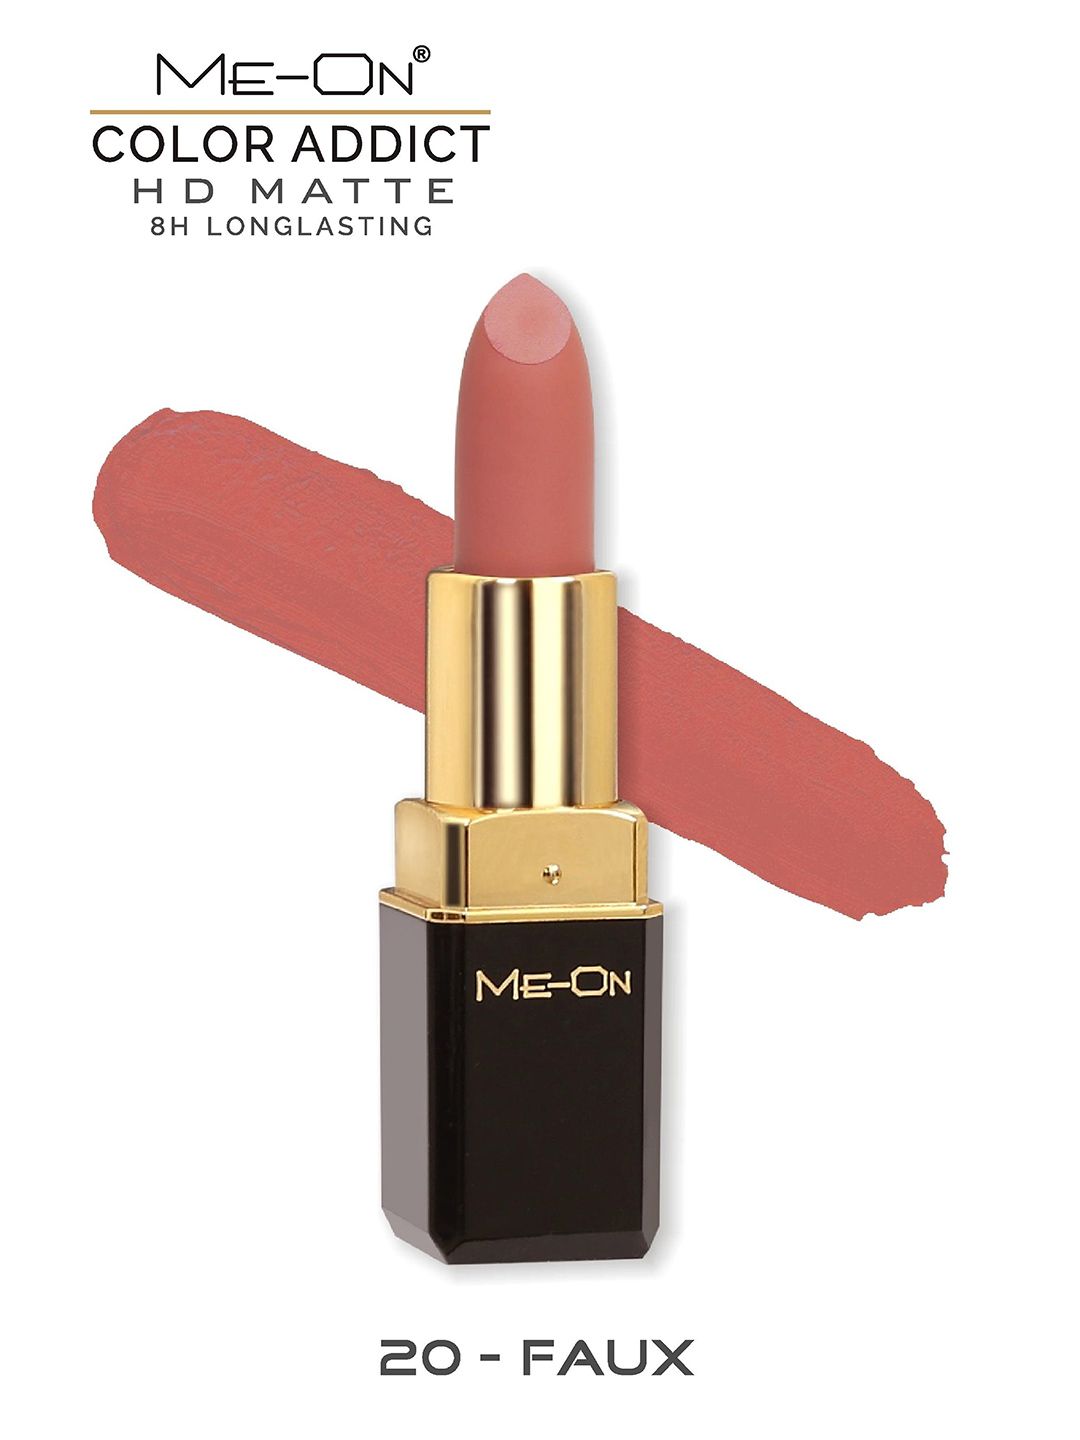 ME-ON Color Addict Matte Lipstick - Faux 20 Price in India